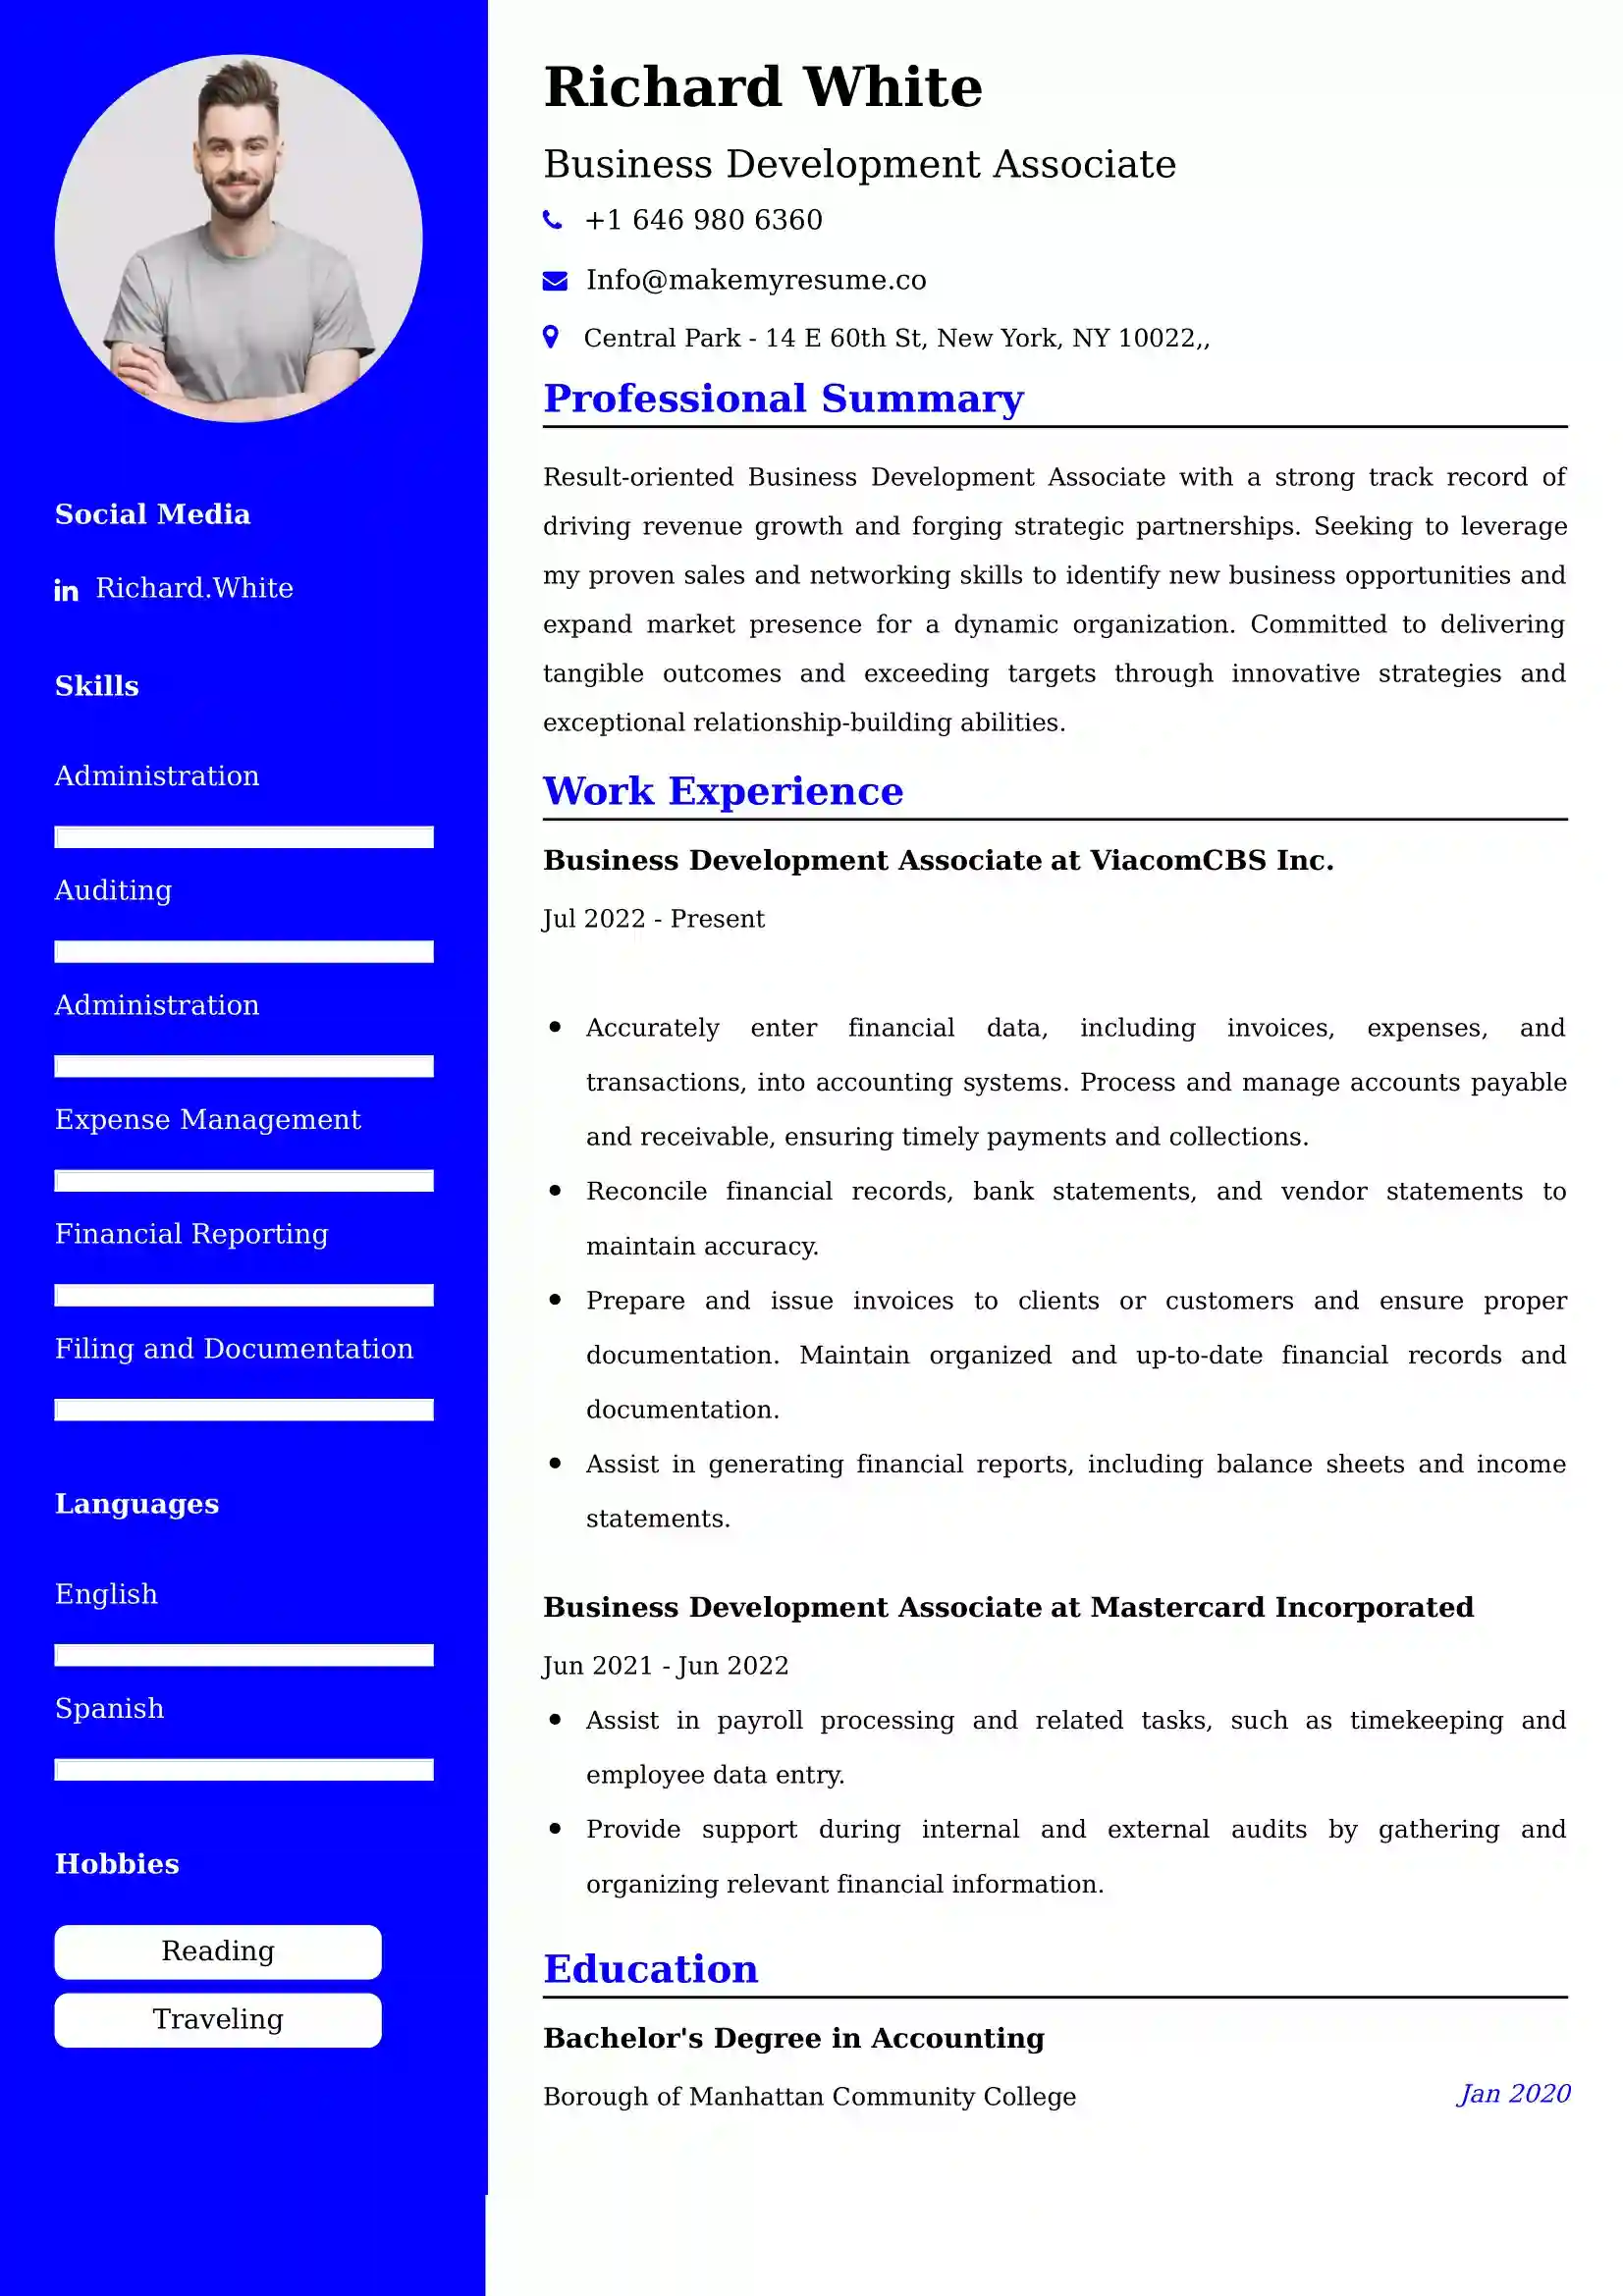 Business Development Associate CV Examples Malaysia